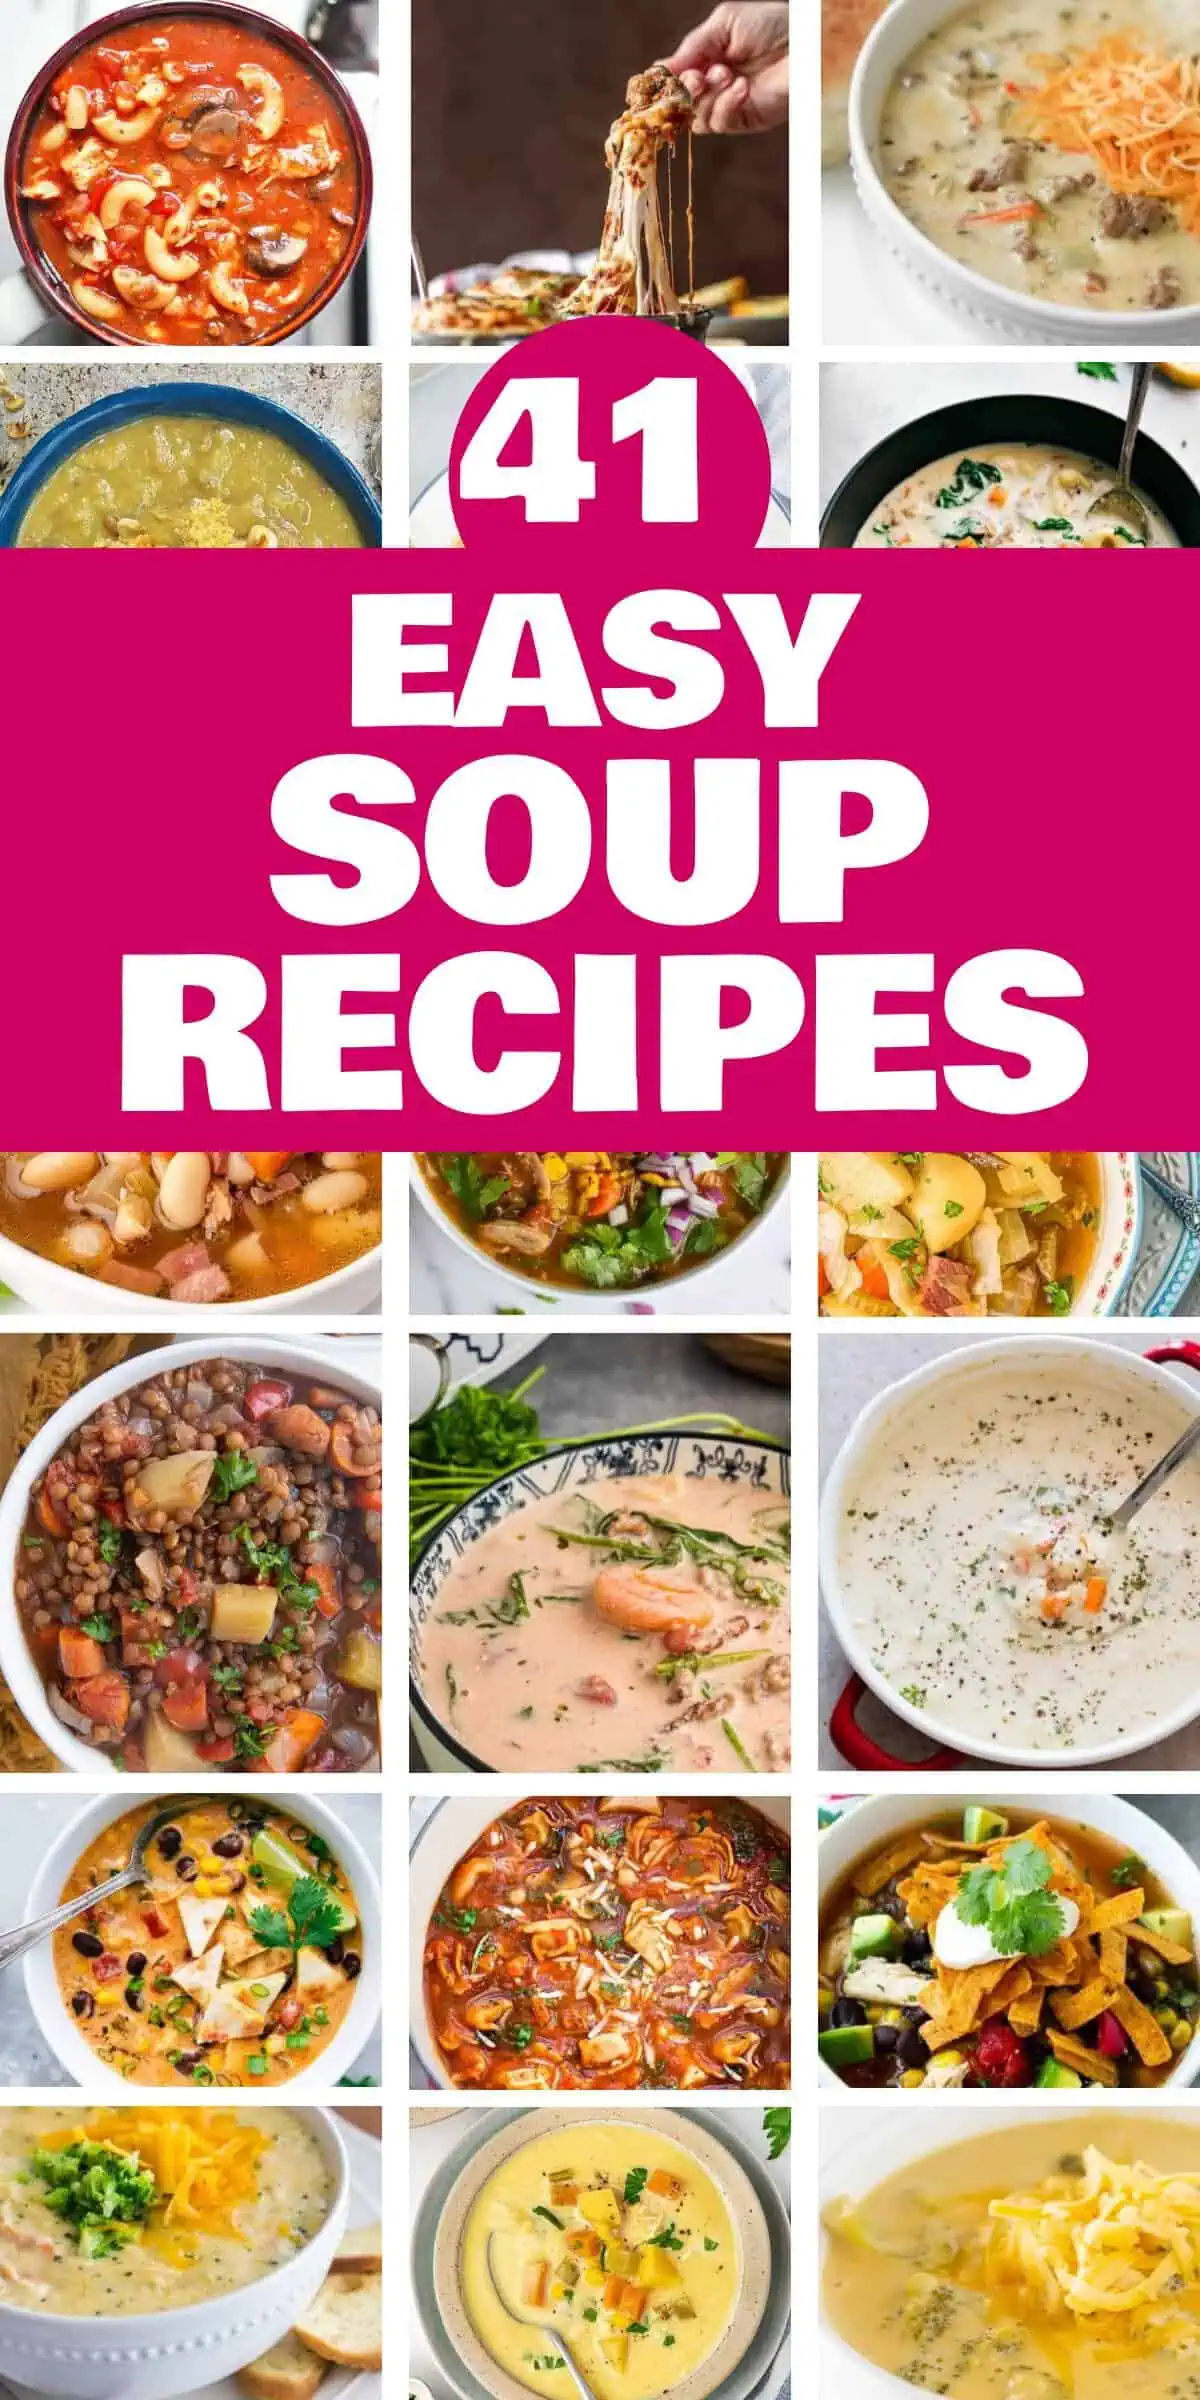 41 Easy Soup Recipes